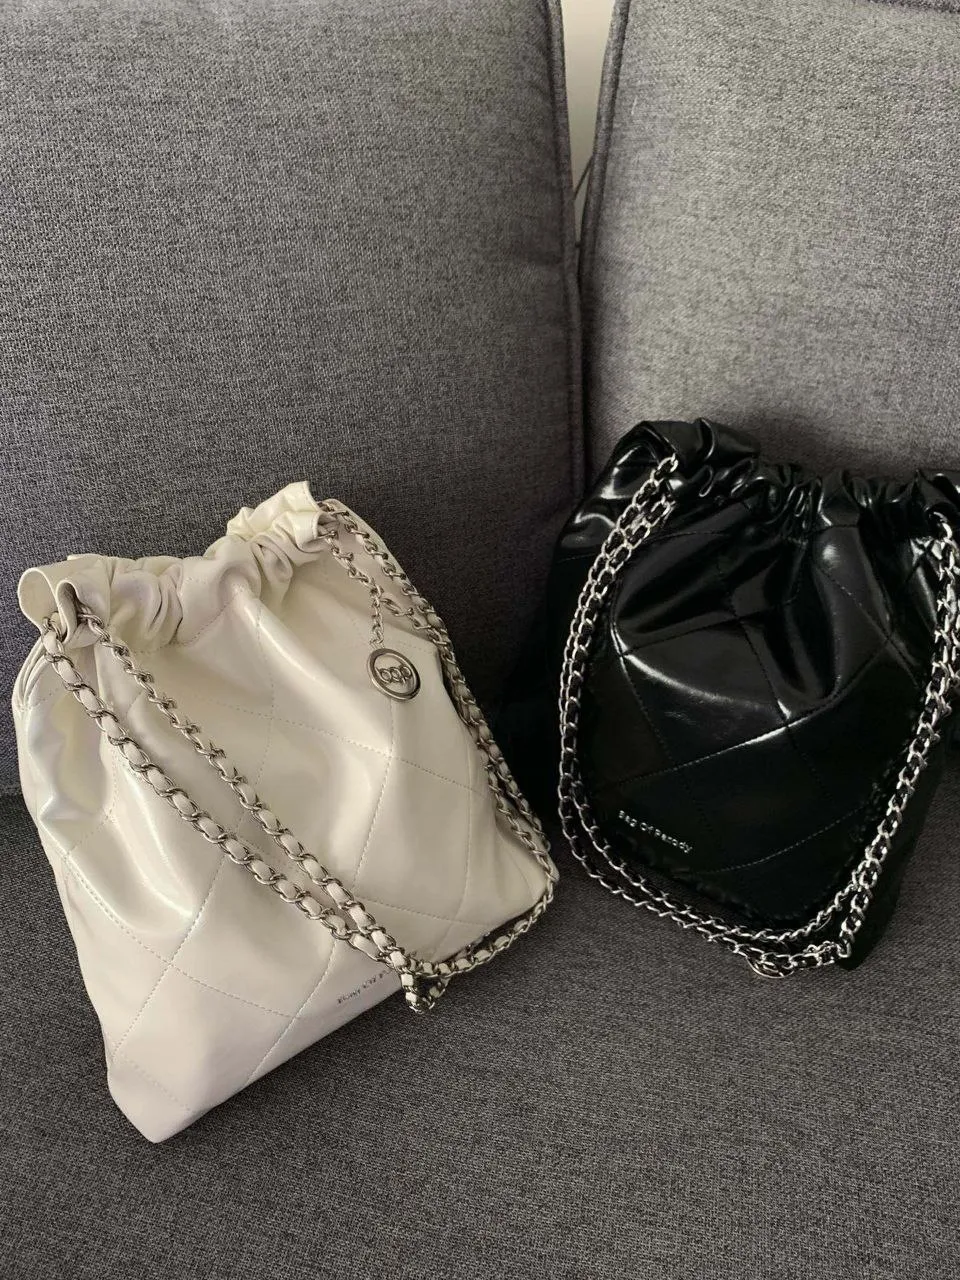 Classy Chain - Silver/Silver Bag Chain – XARI COLLECTIONS